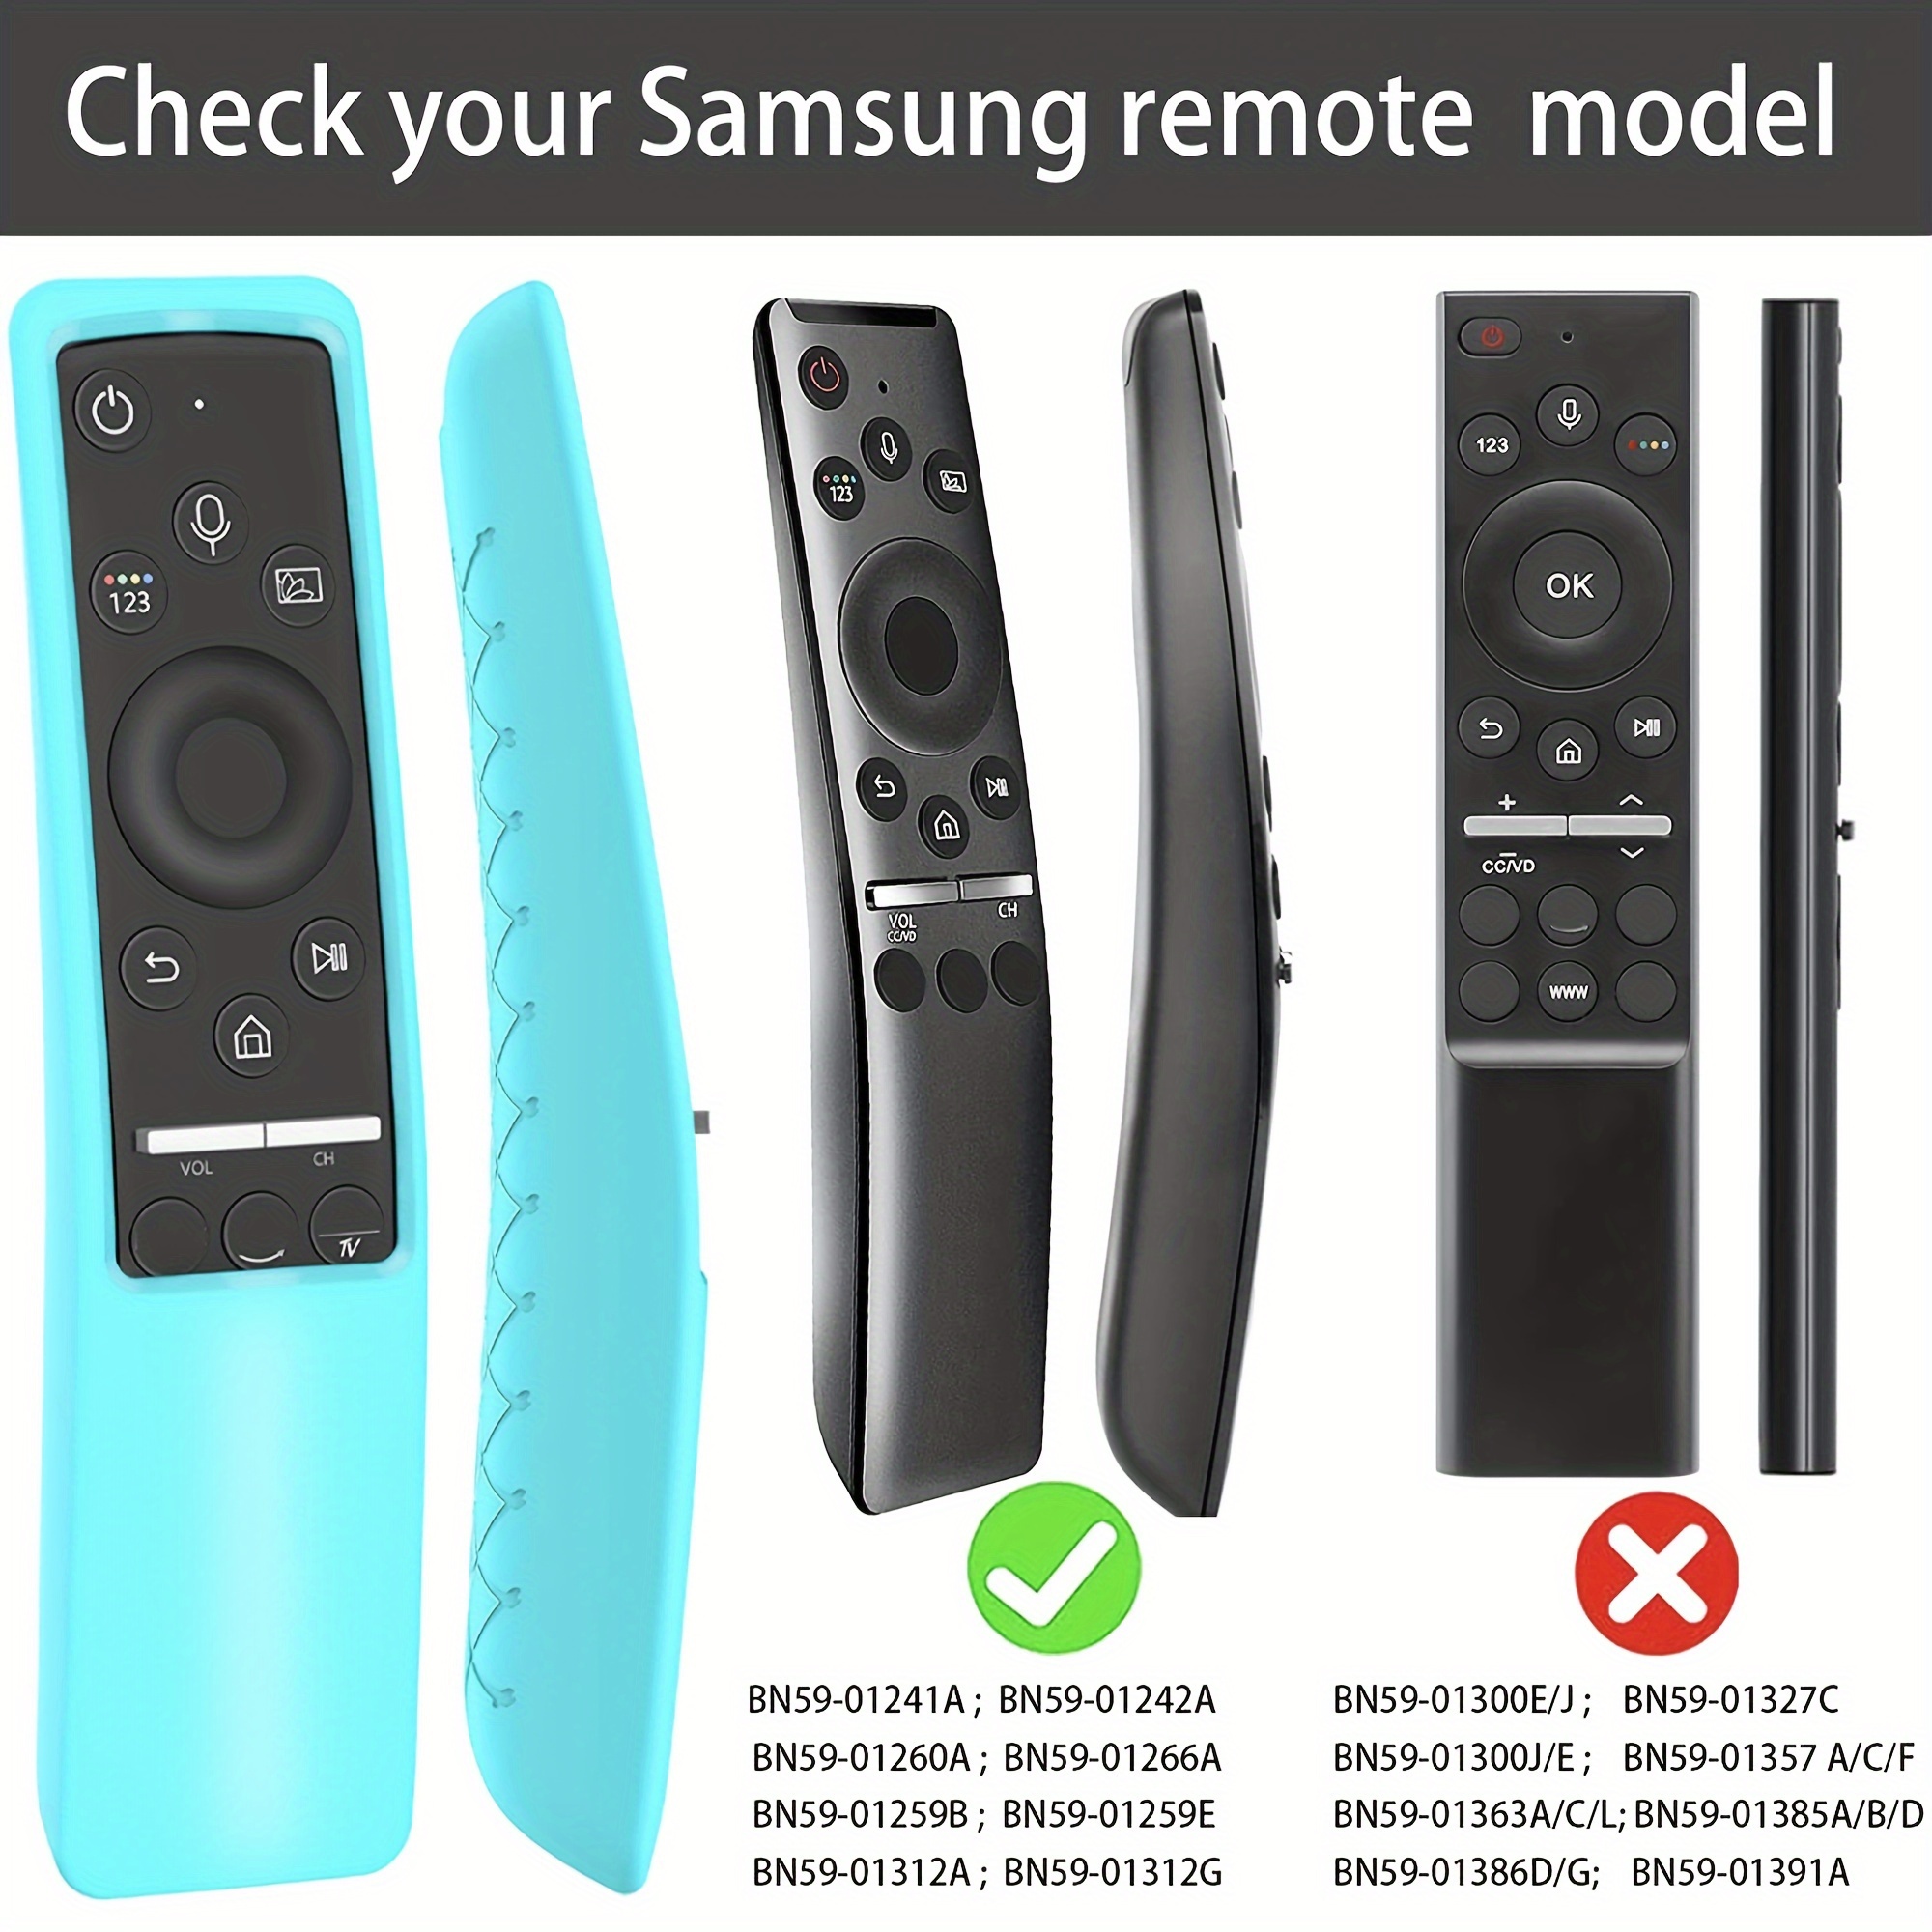 Samsung BN59-01385A Smart TV Remote Control - Black for sale online